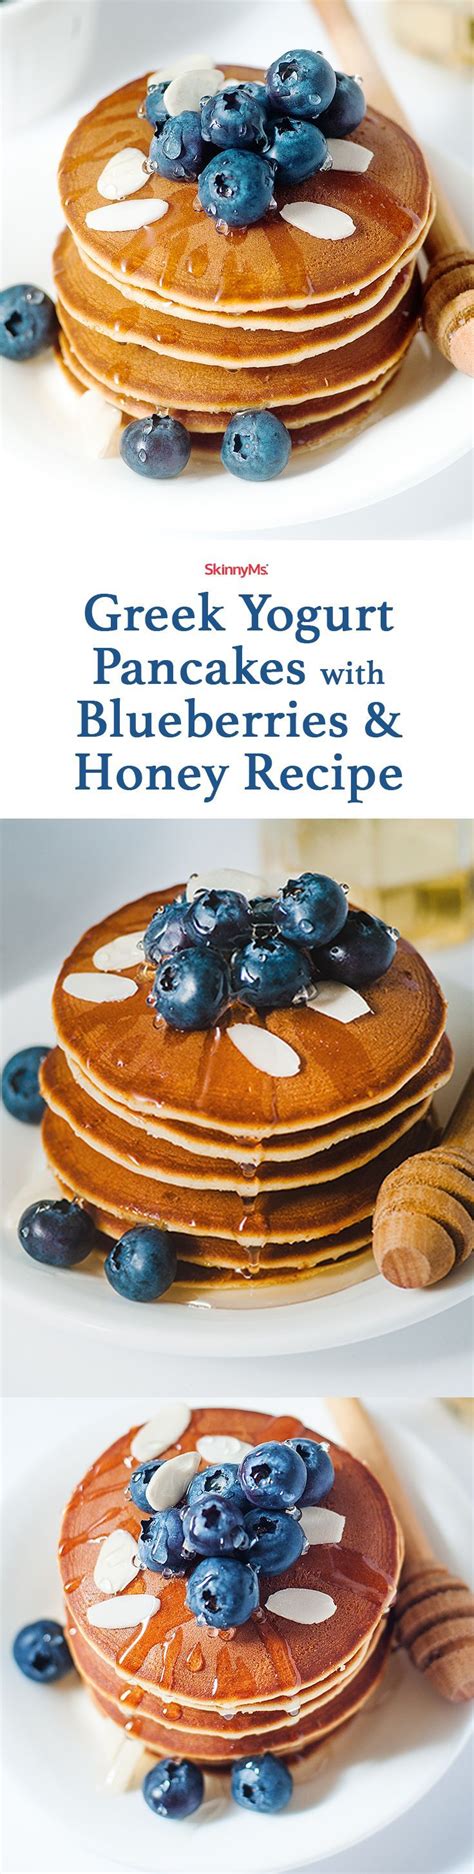 Top pancakes with syrup, fruit, or desired toppings. Greek Yogurt Pancakes with Blueberries & Honey | Recipe ...